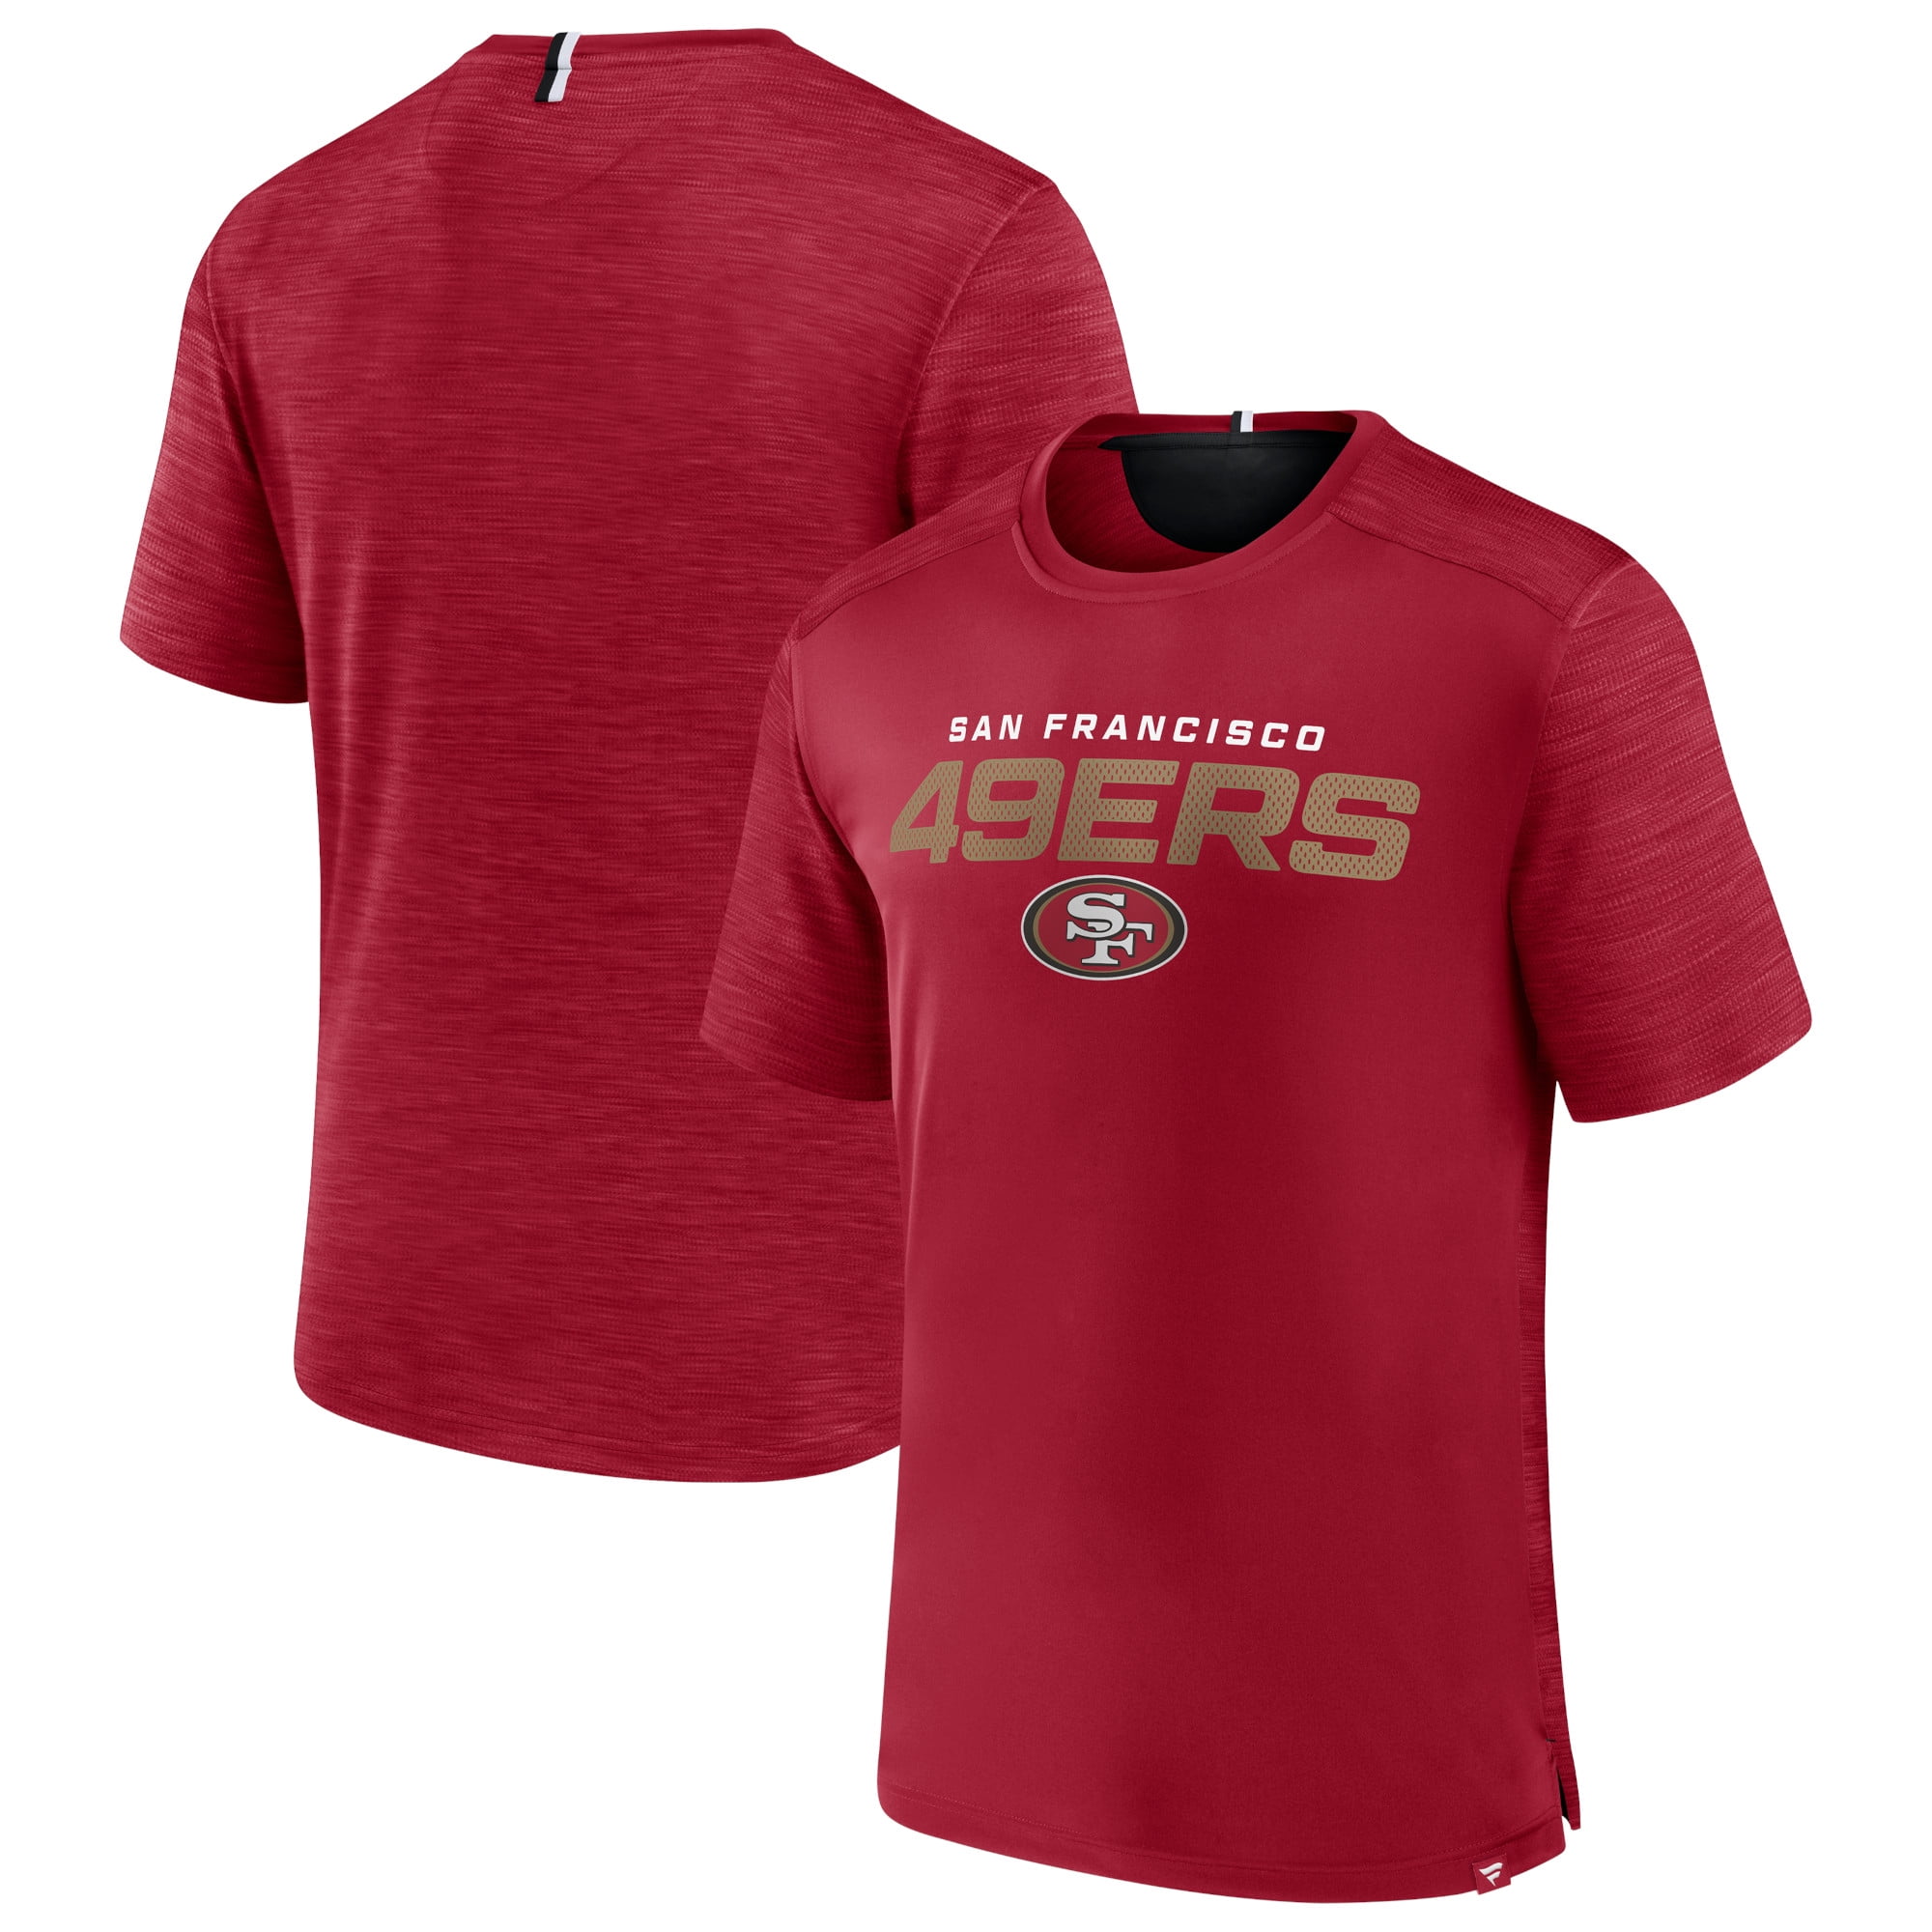 Men's Fanatics Branded Scarlet San Francisco 49ers Defender Evo T-Shirt ...